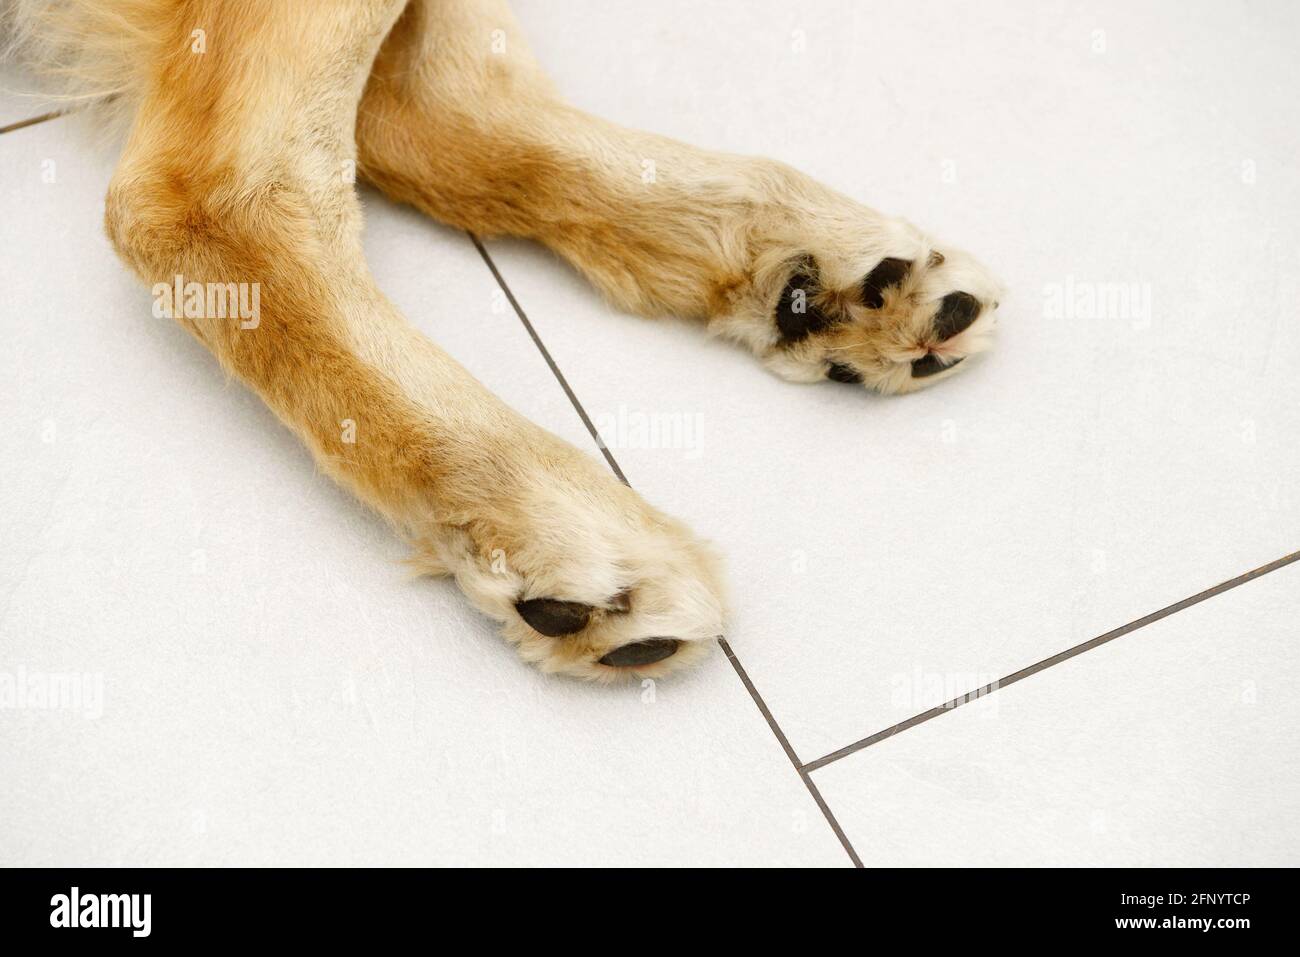 dog paw from golden retriever lying on white tile Stock Photo